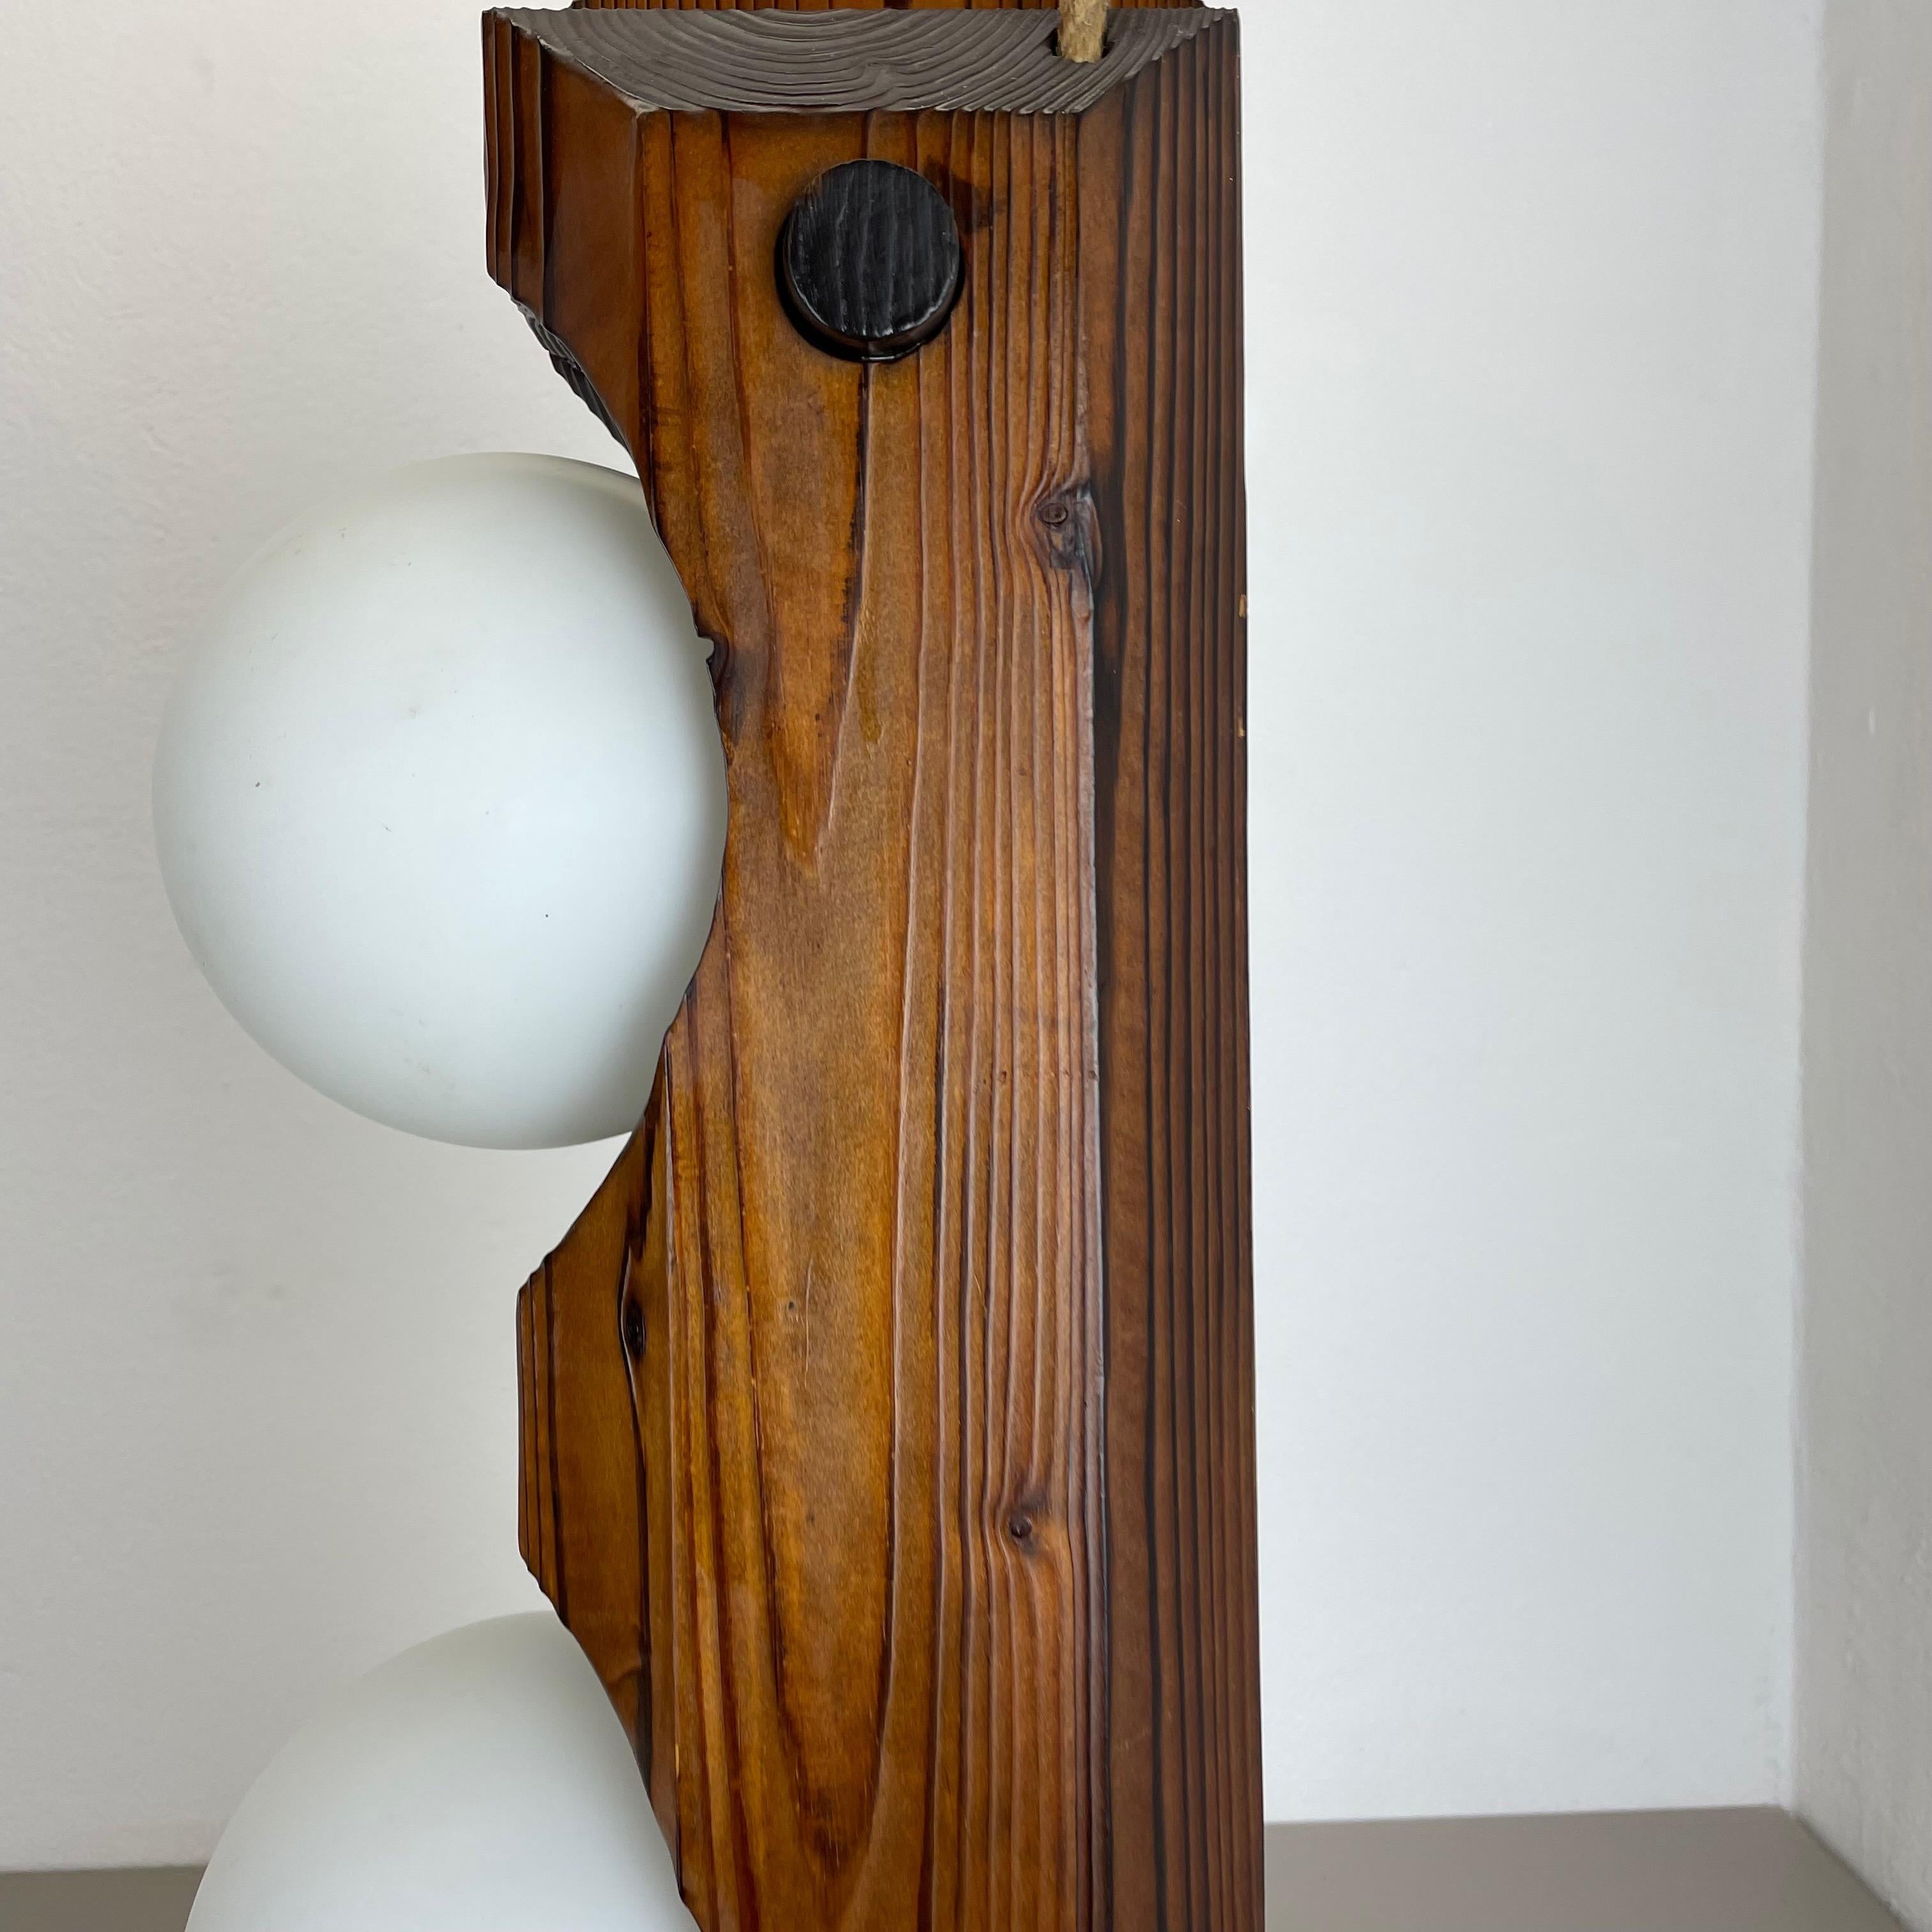 Large Organic Sculptural Pine Wooden Floor Light Made Temde Lights Germany 1970s For Sale 4